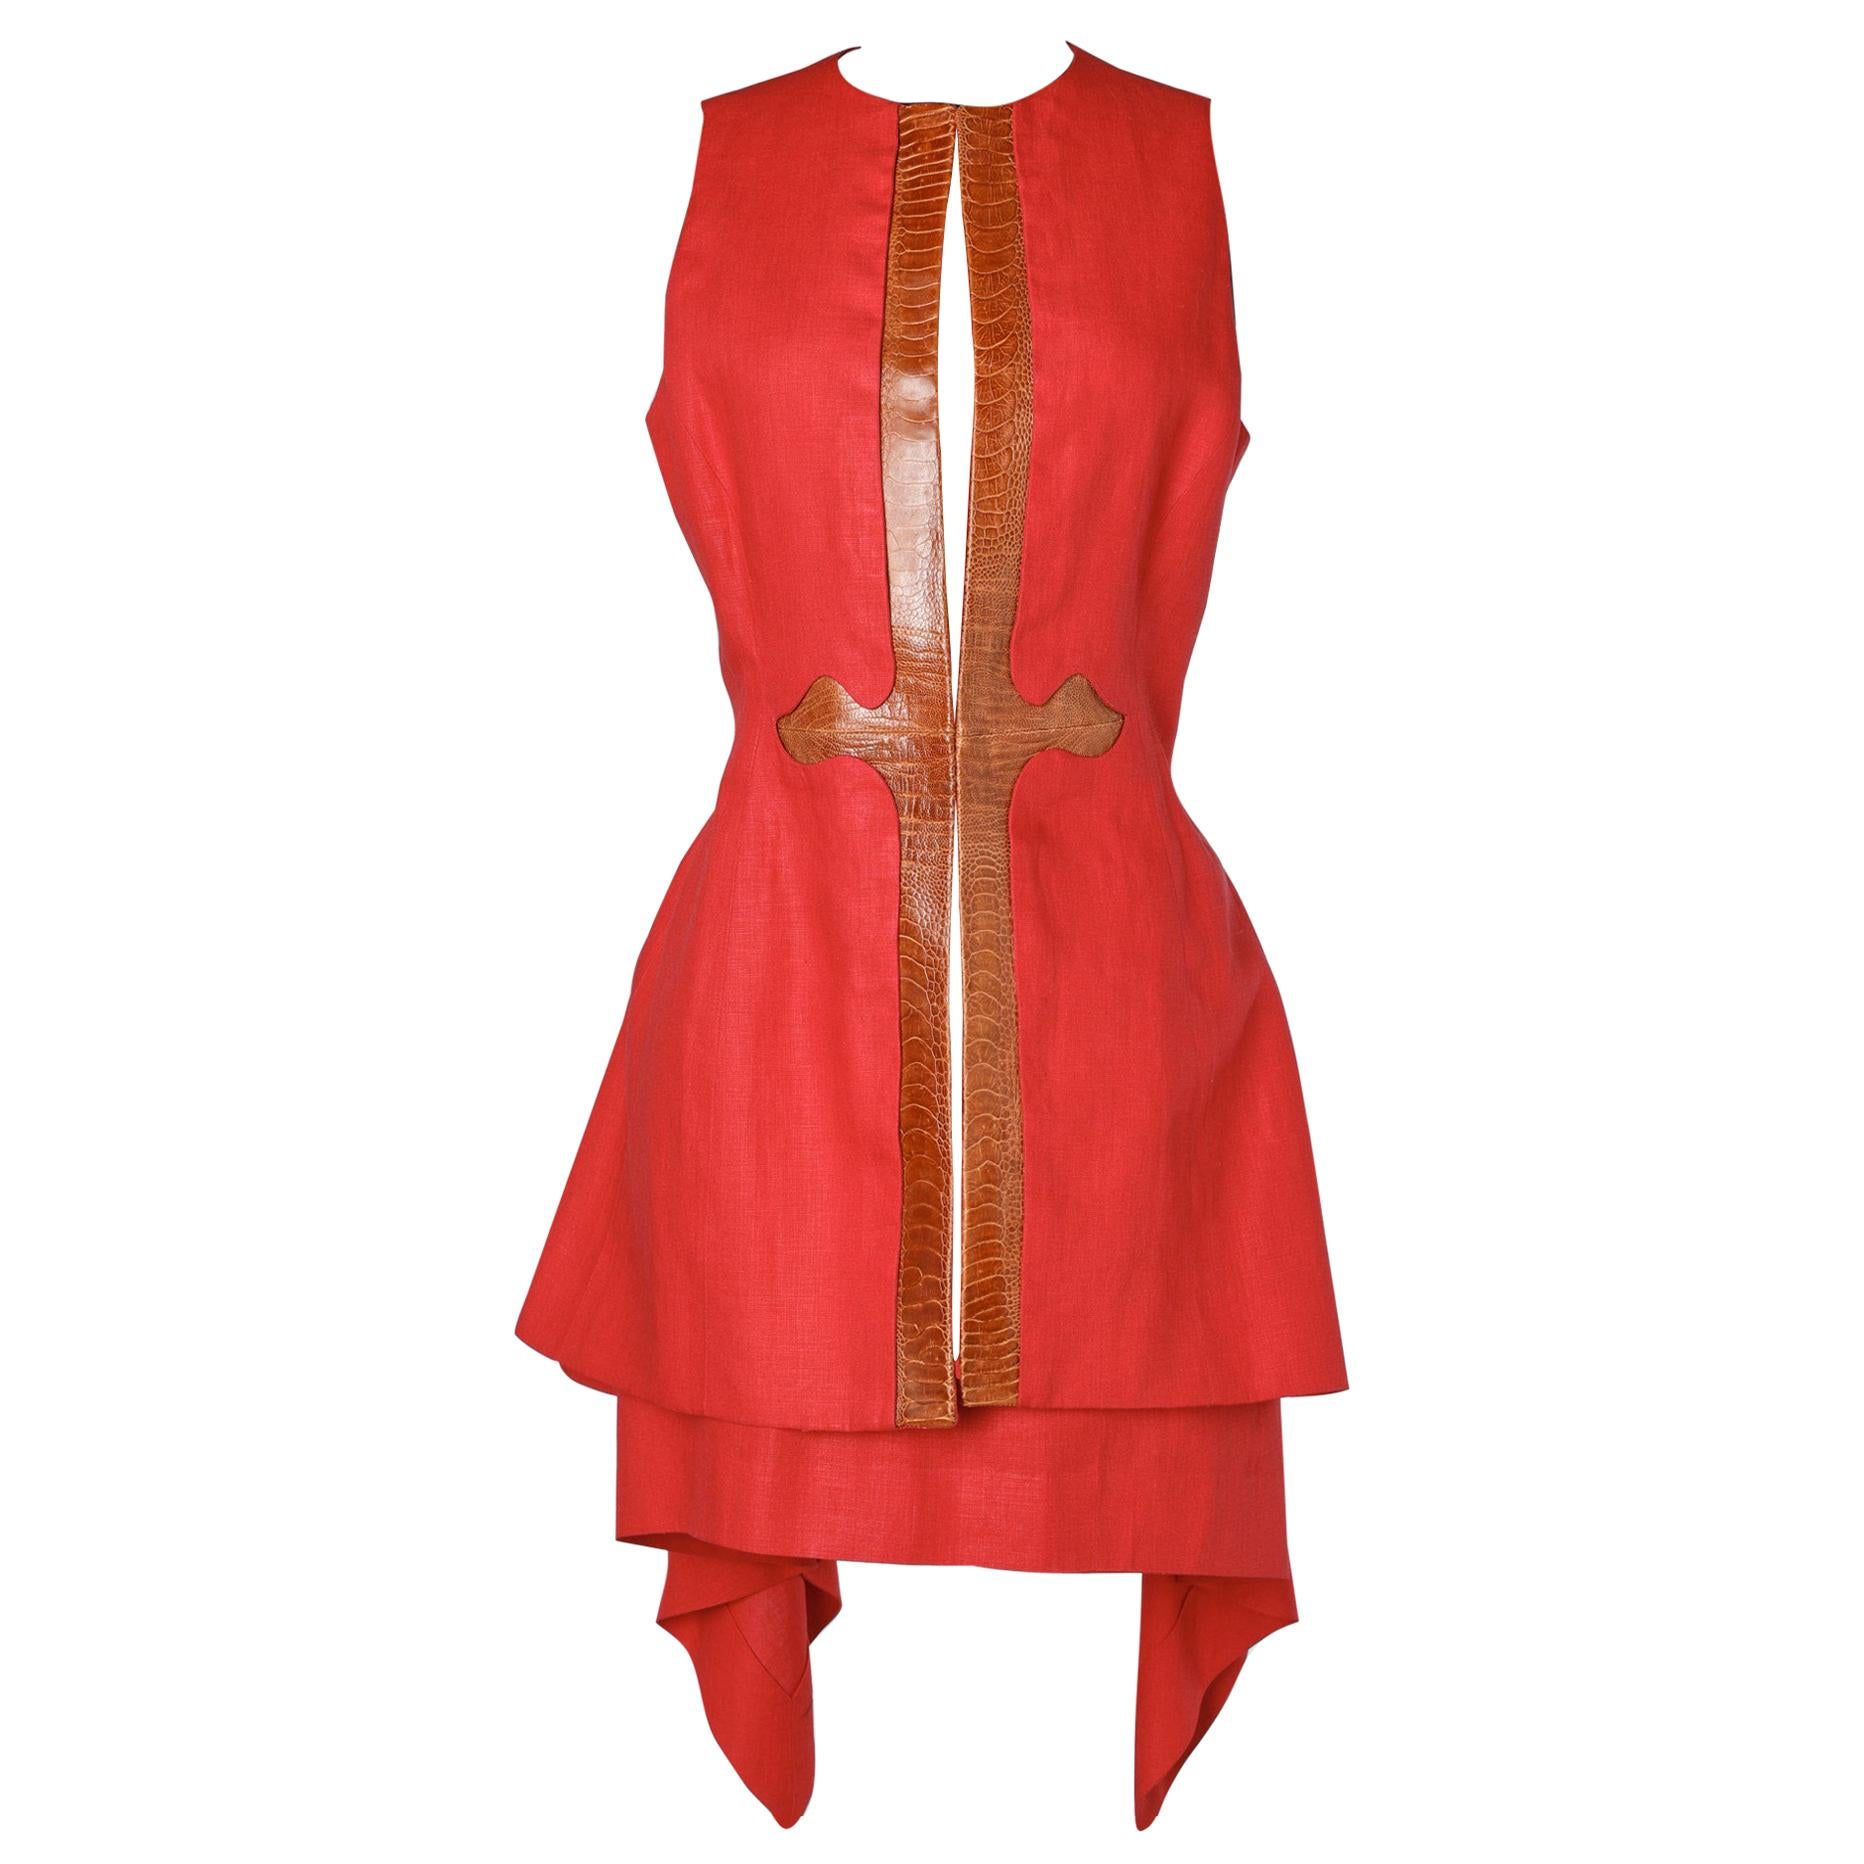 Couture Rock-Anzug aus rotem Leinen und braunem Krokodil Lecoanet-Saum